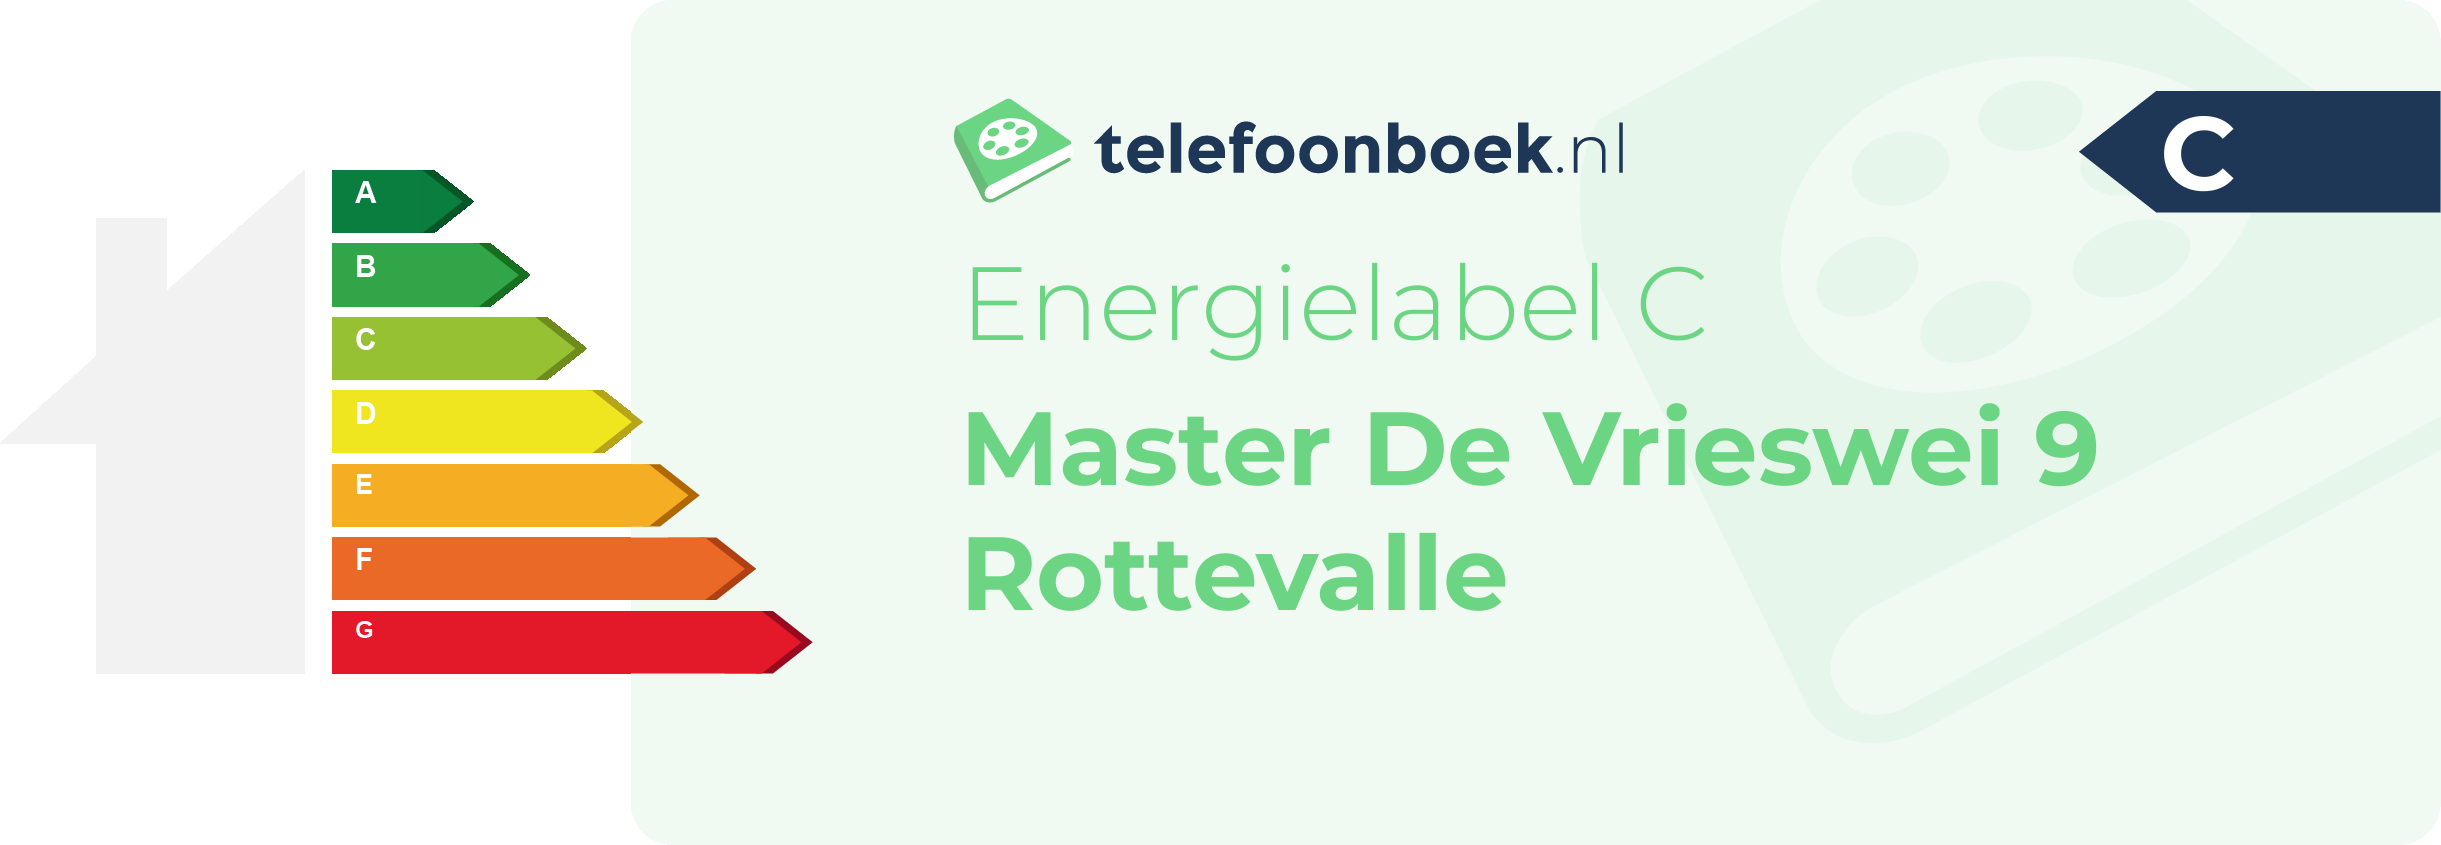 Energielabel Master De Vrieswei 9 Rottevalle